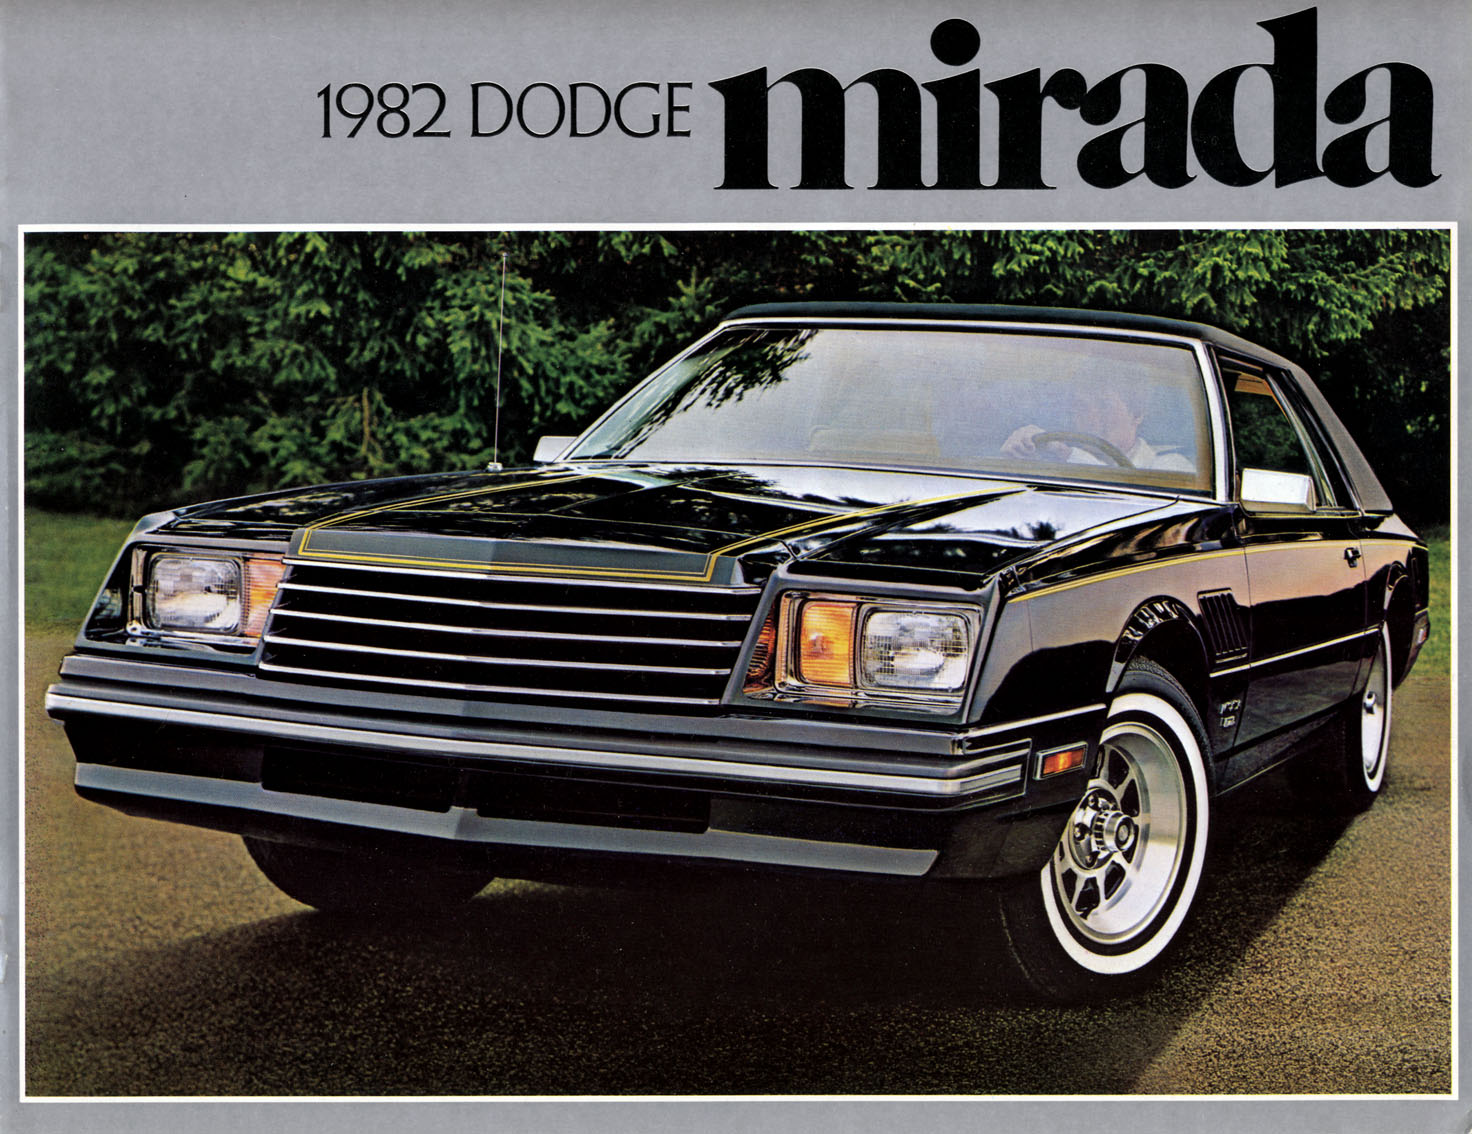 1982 Dodge Mirada Brochure